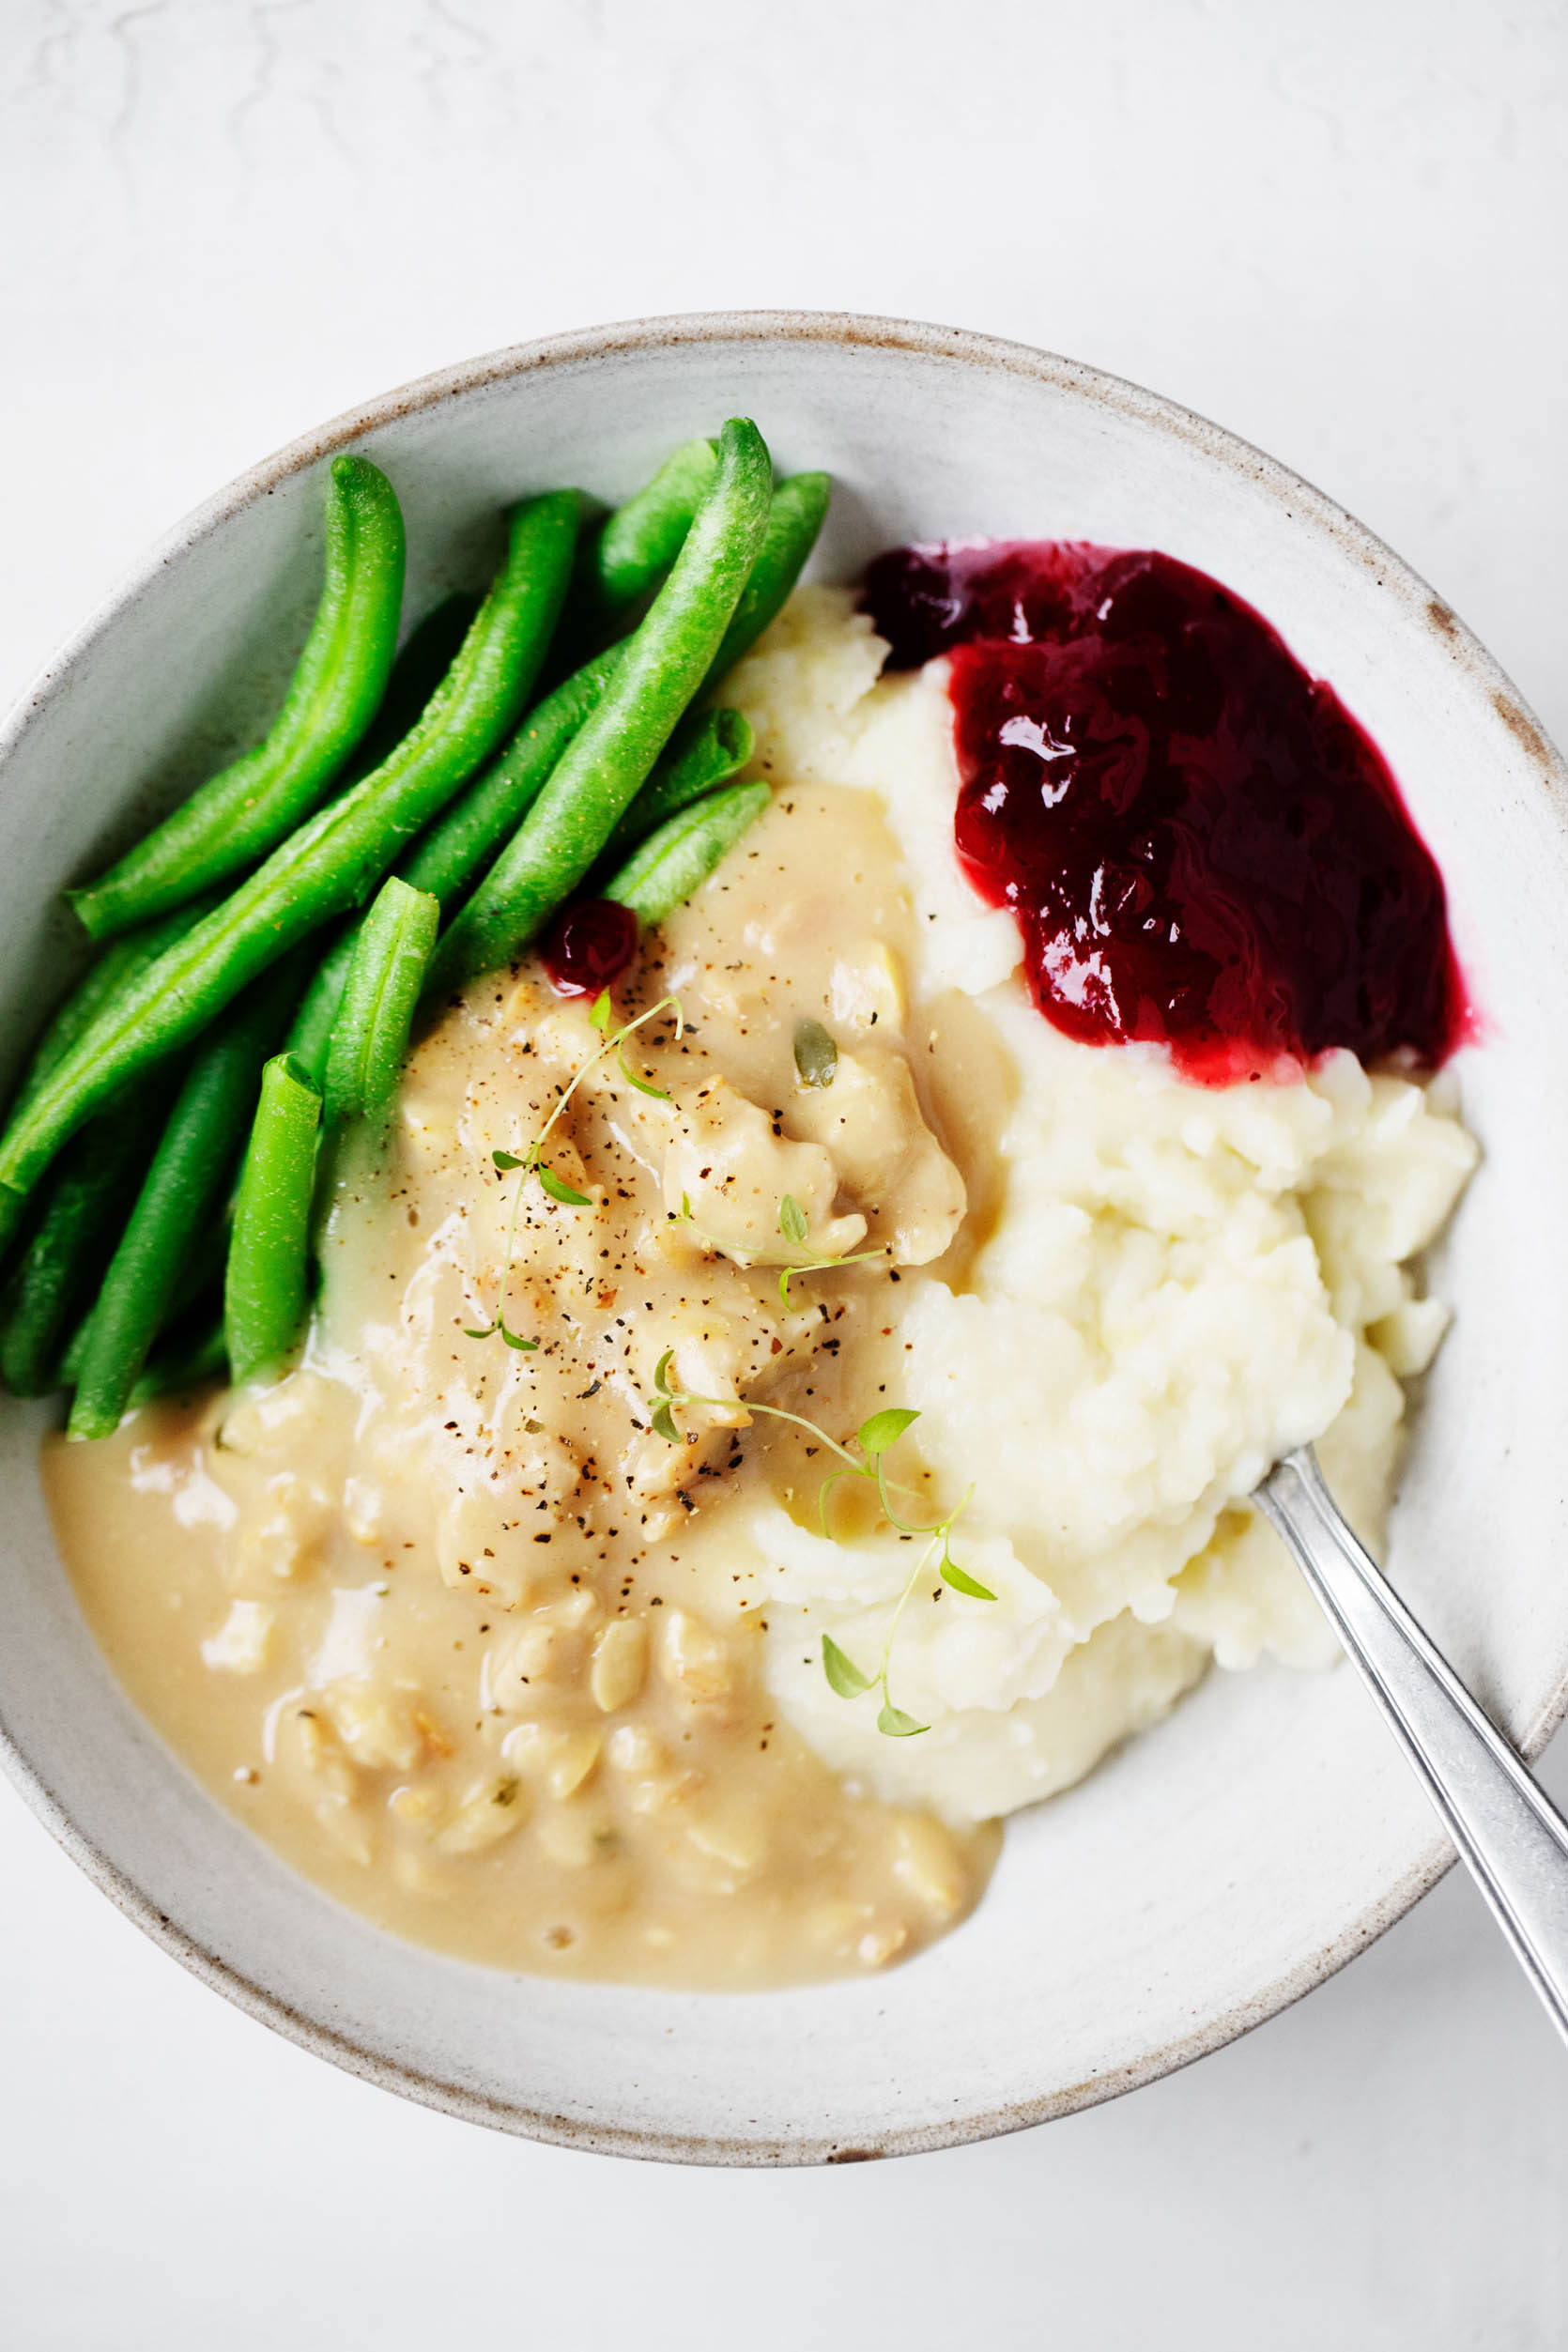 Mashed Potato Bowls with Vegan Gravy | The Full Helping